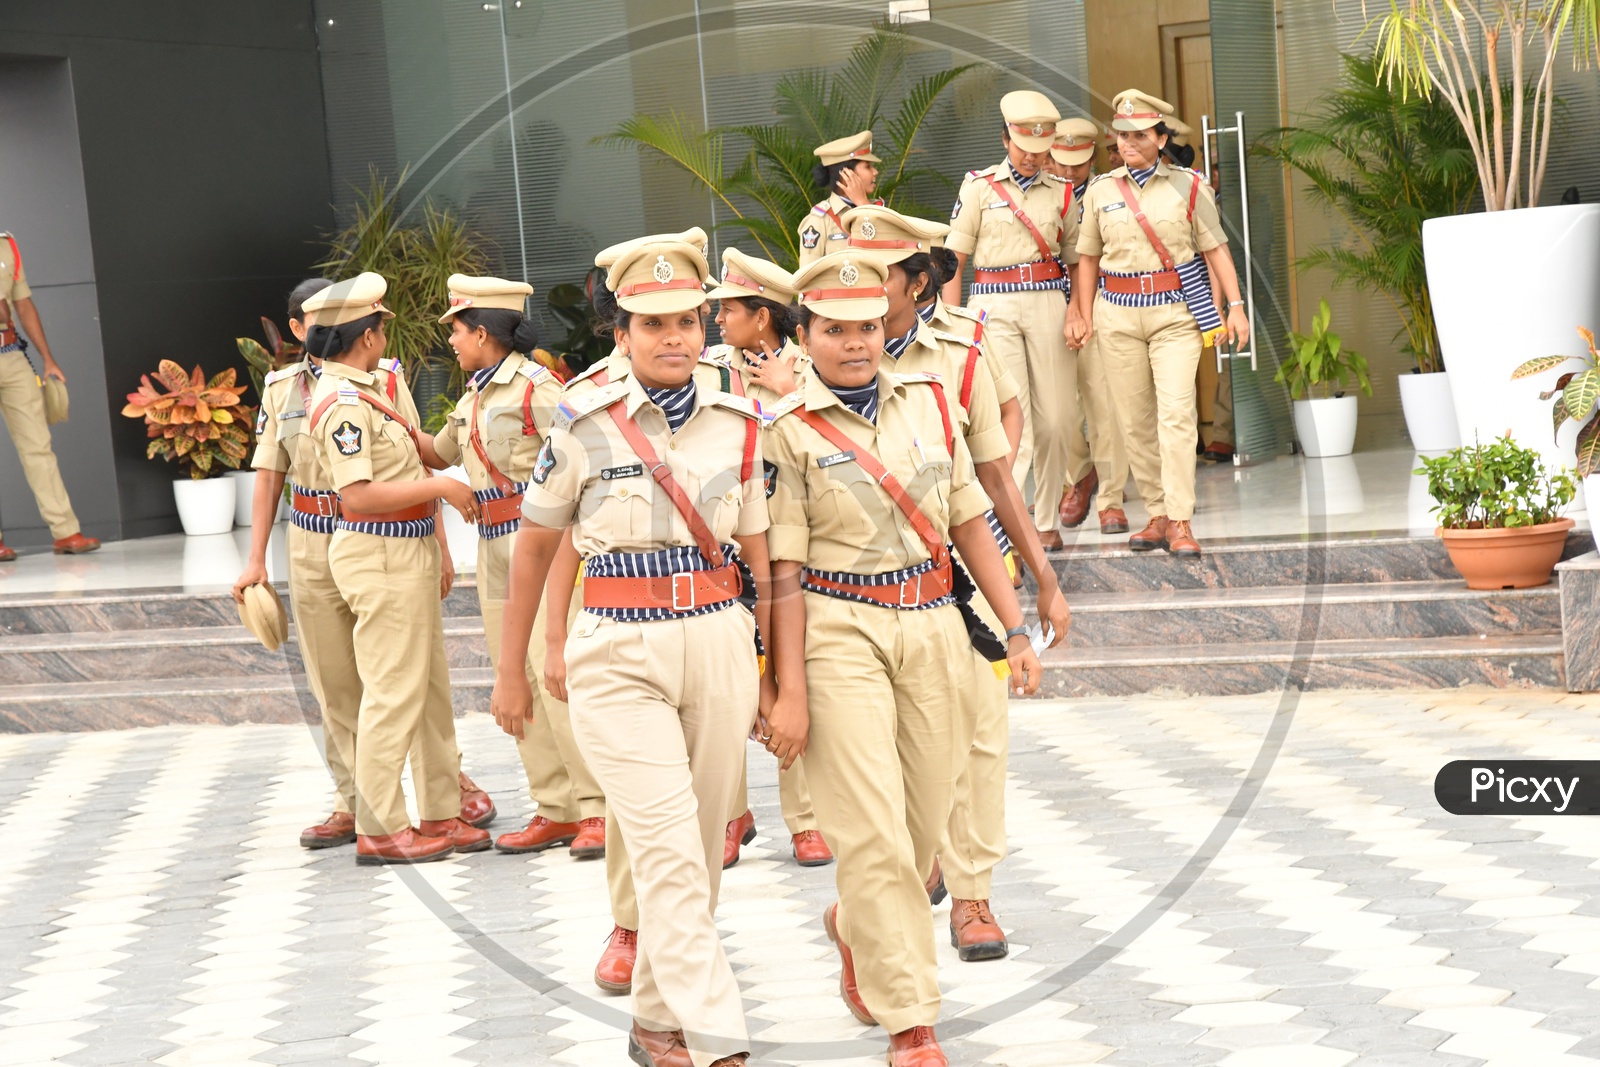 Andhra Pradesh Lady Police Trainee Sub Inspectors, 27th June 2018